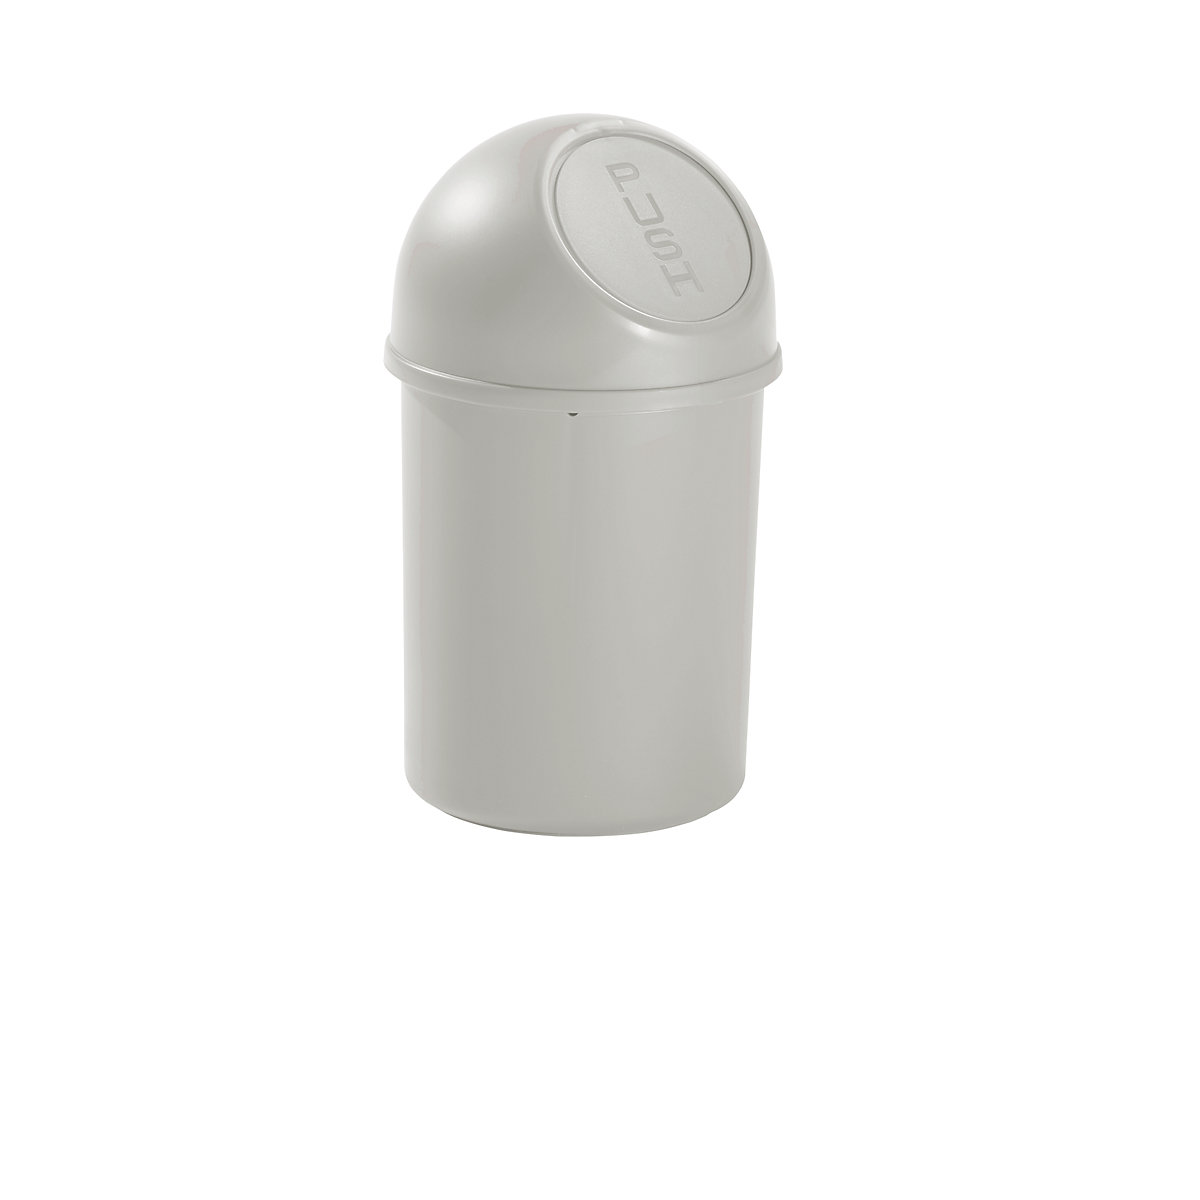 Recipiente de lixo Push em plástico – helit, capacidade 6 l, embalagem de 6 unid., AxØ 375 x 216 mm, cinzento claro-4